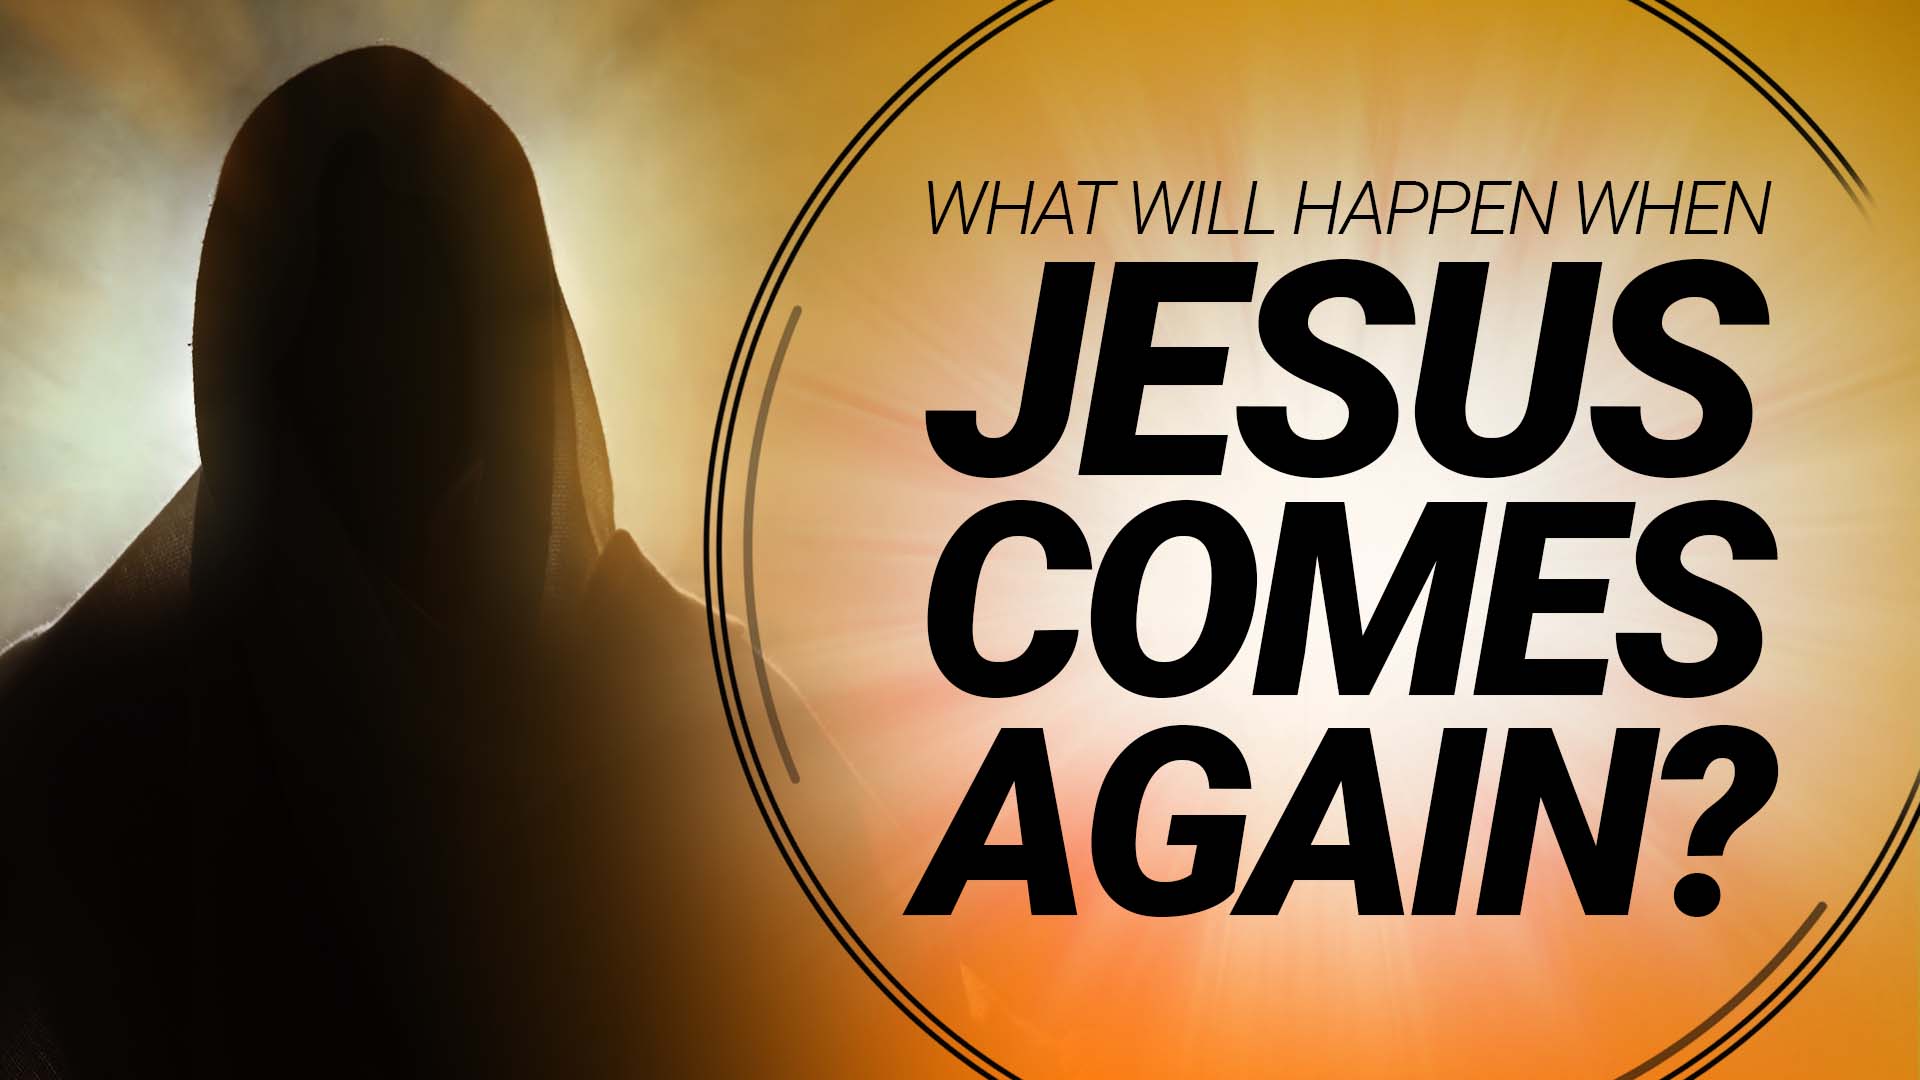 What will happen when Jesus comes again?